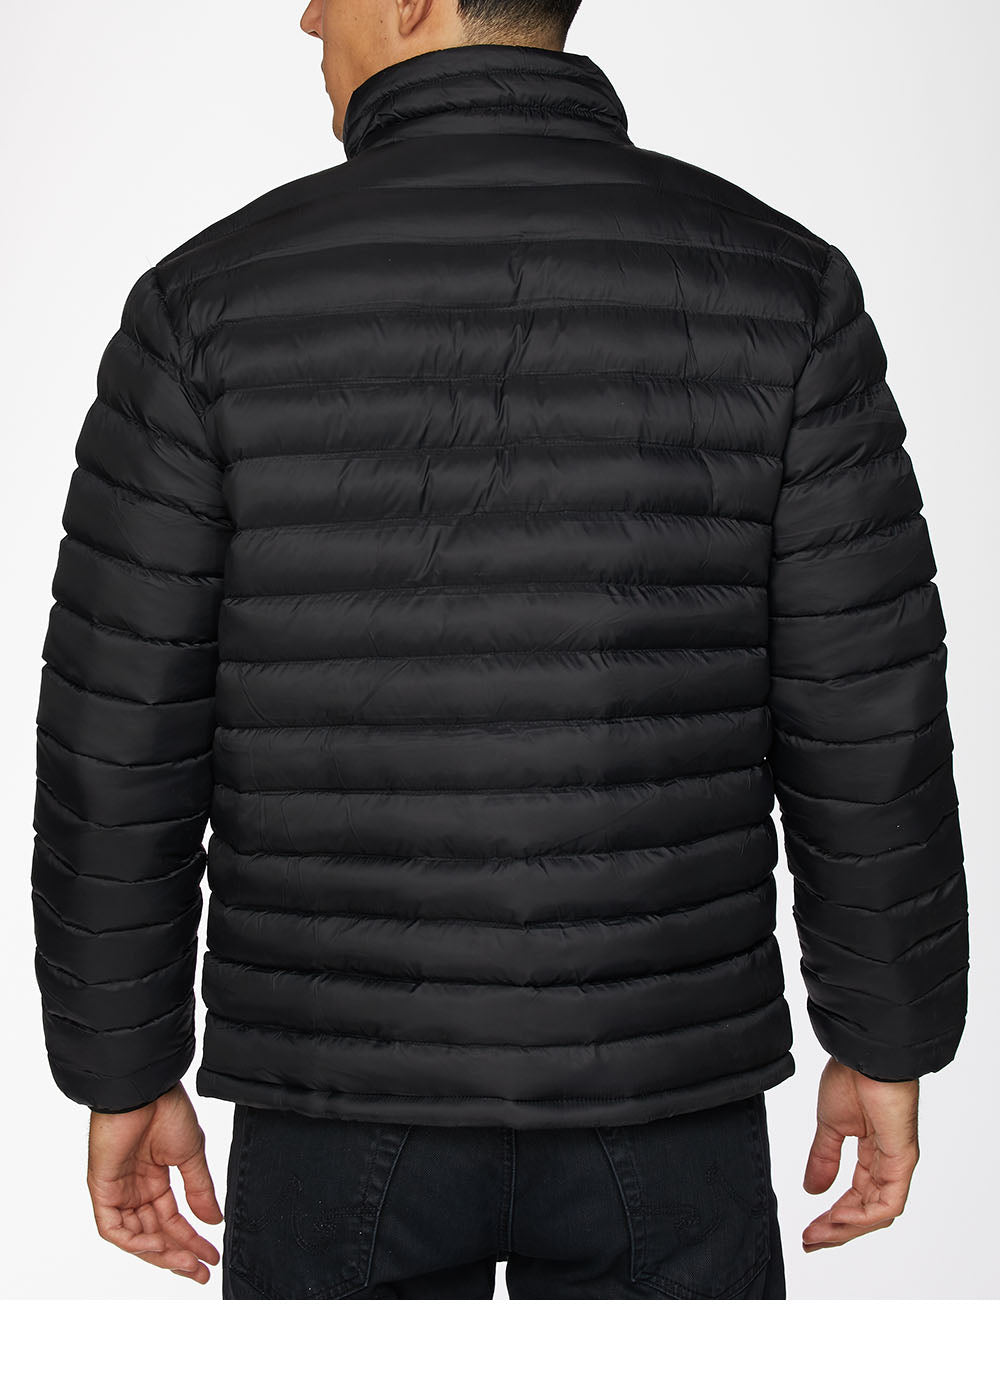 Men's Nylon Quilted Puffer Jacket -NJ640-Black